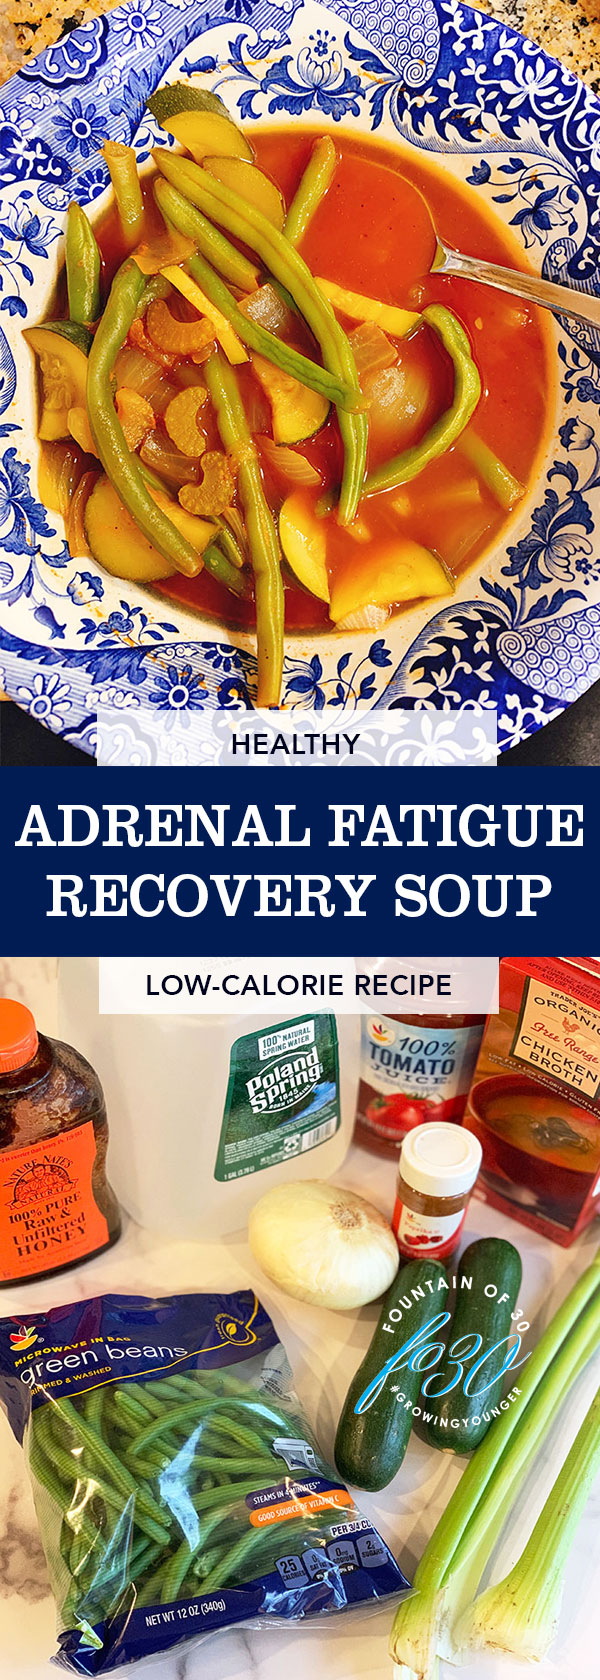 adrenal fatigue recovery soup fountainof30